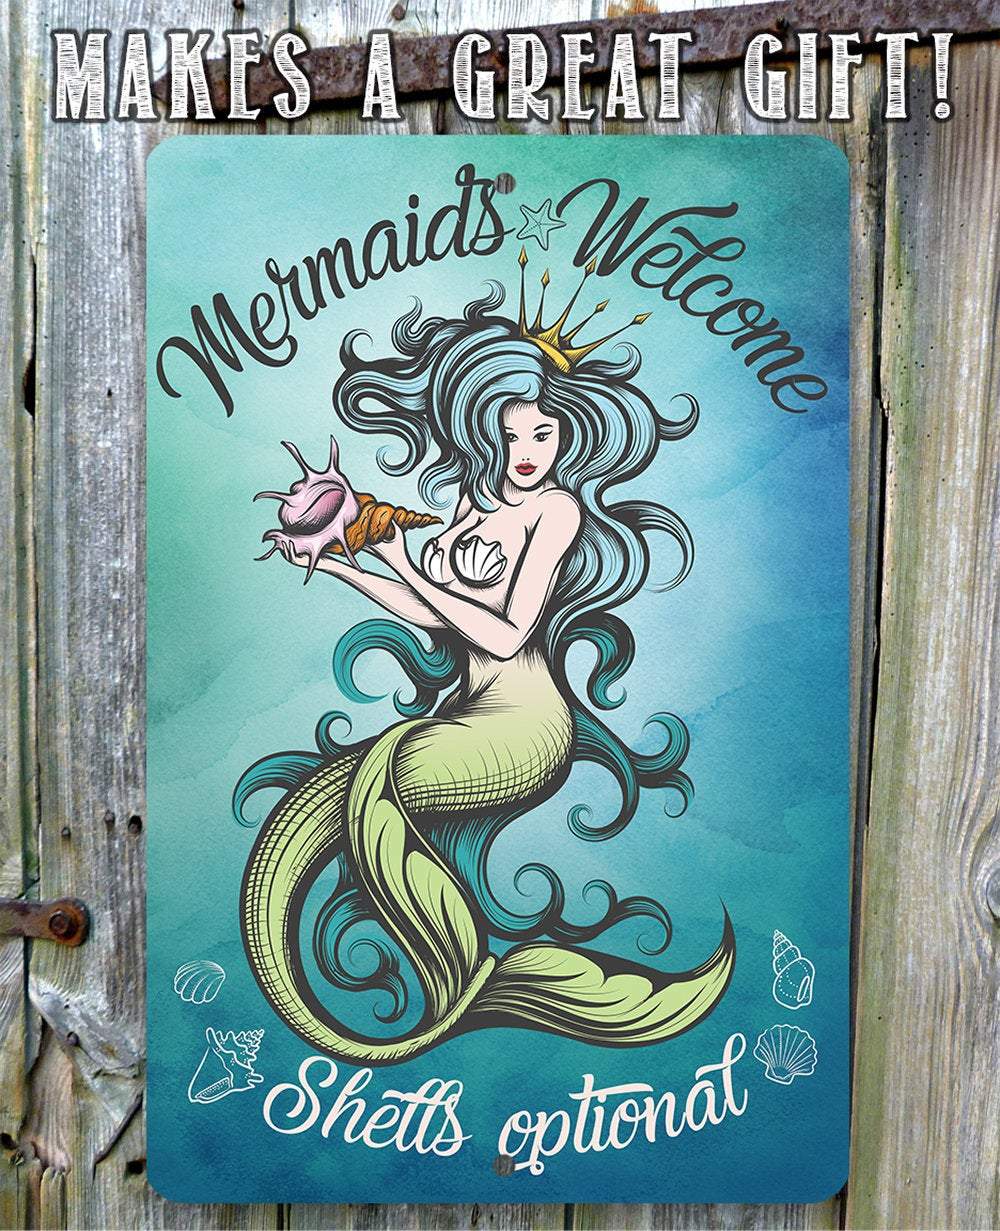 Mermaids Welcome Shells Optional - Metal Sign | Lone Star Art.